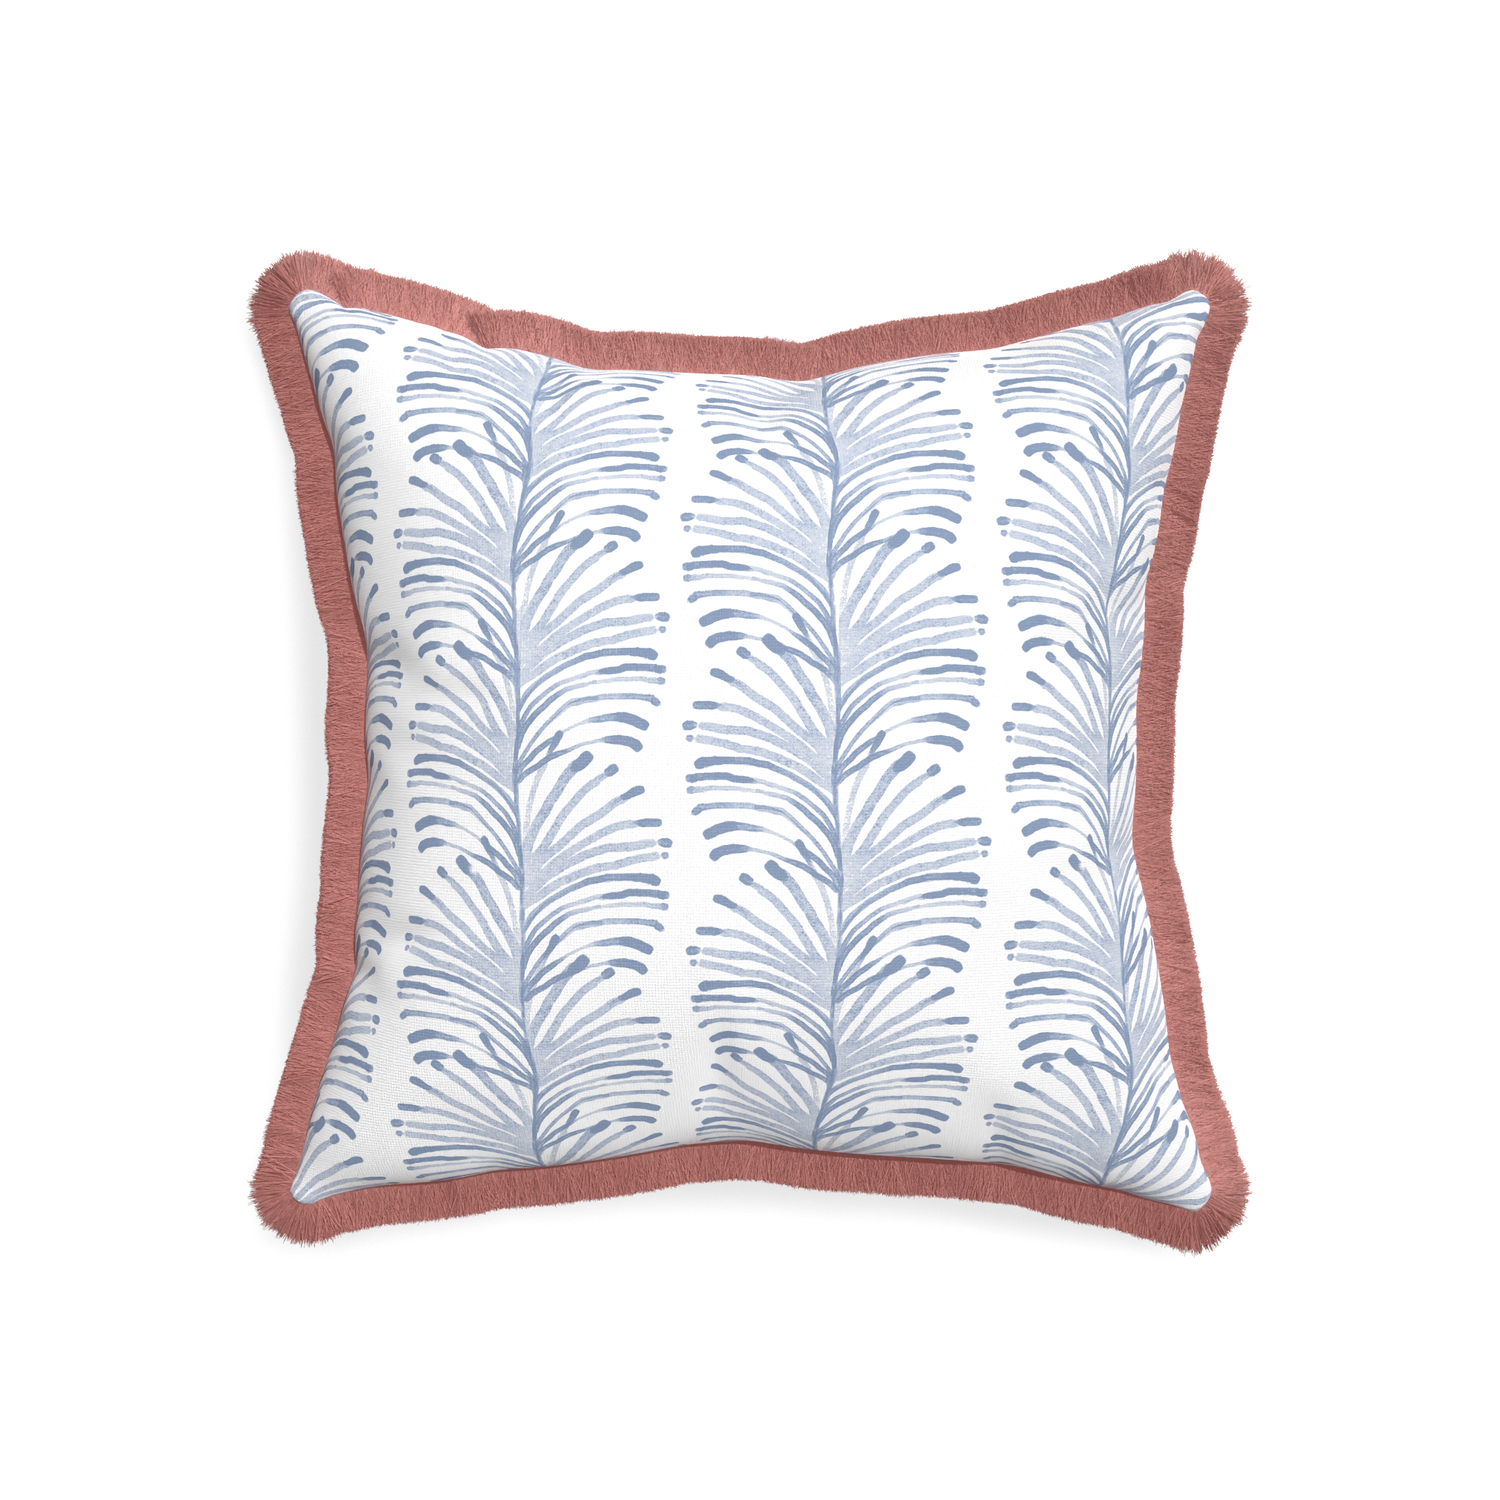 20-square emma sky custom pillow with d fringe on white background